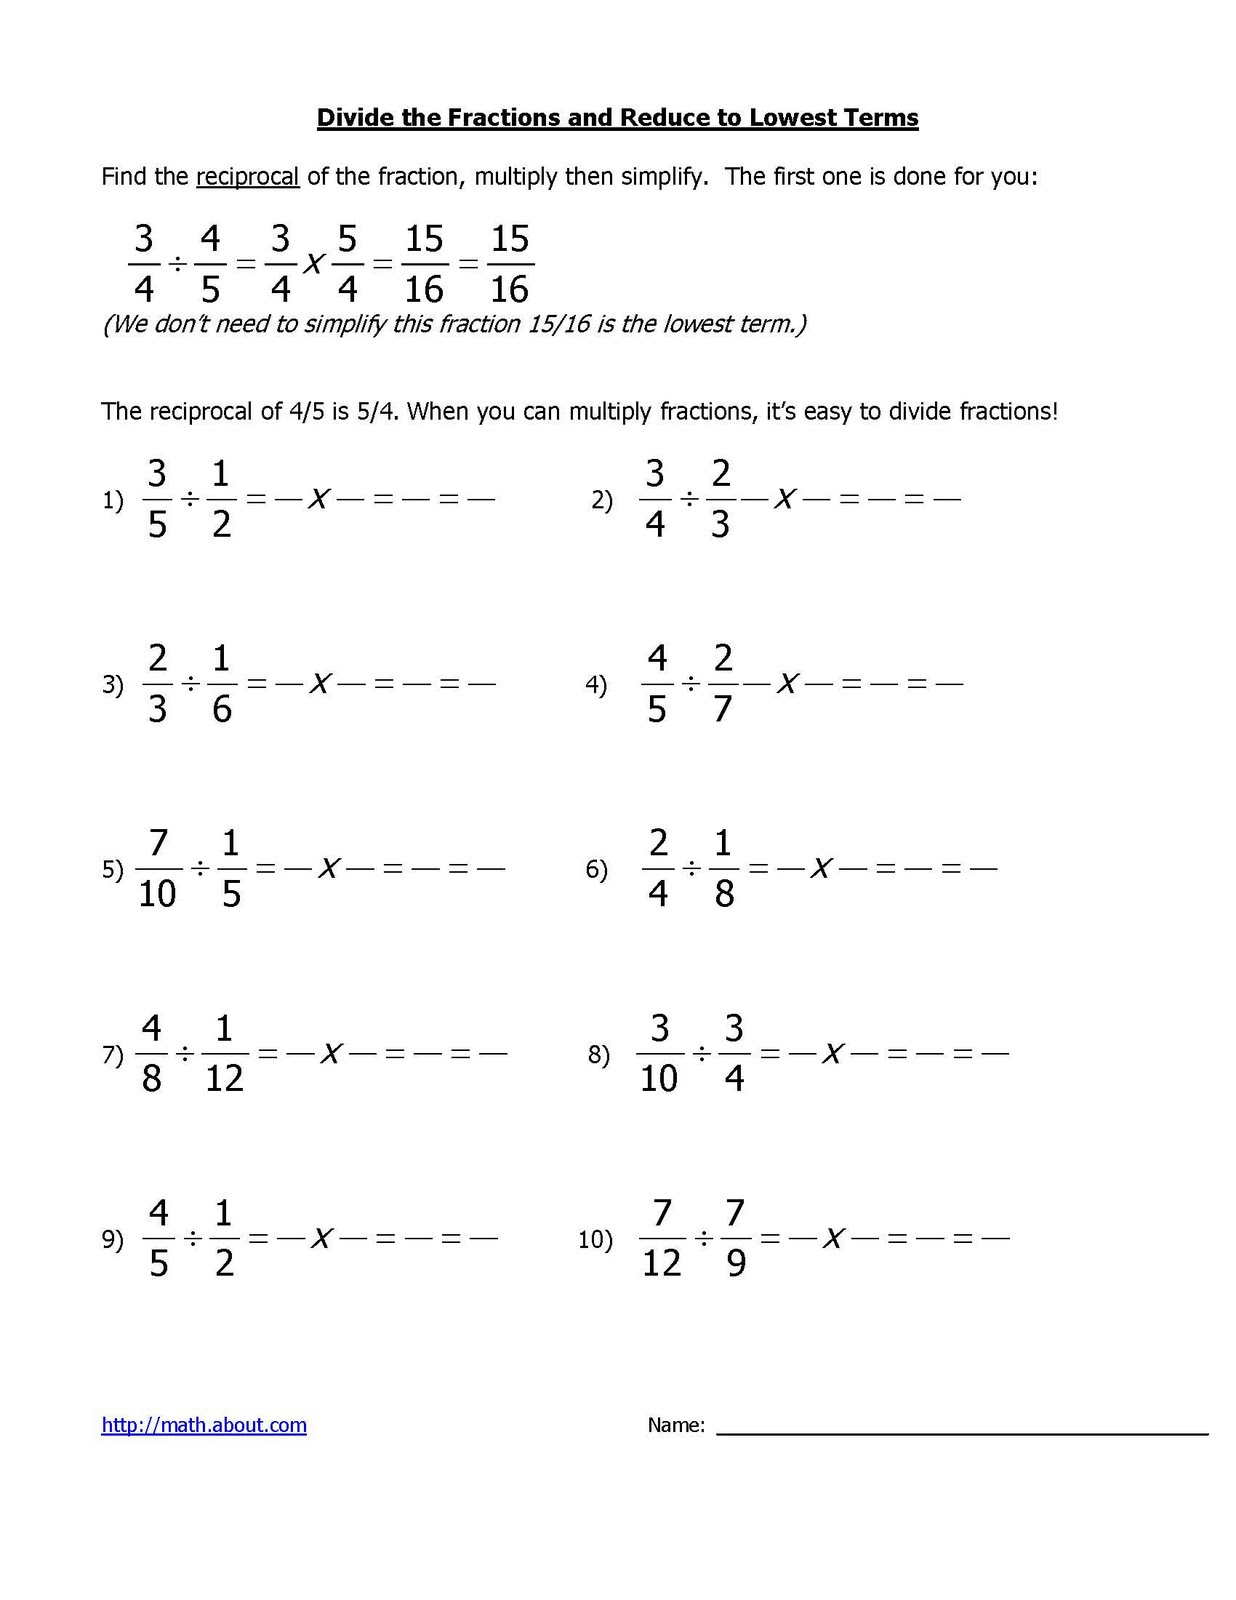 dividing-fractions-printable-worksheet